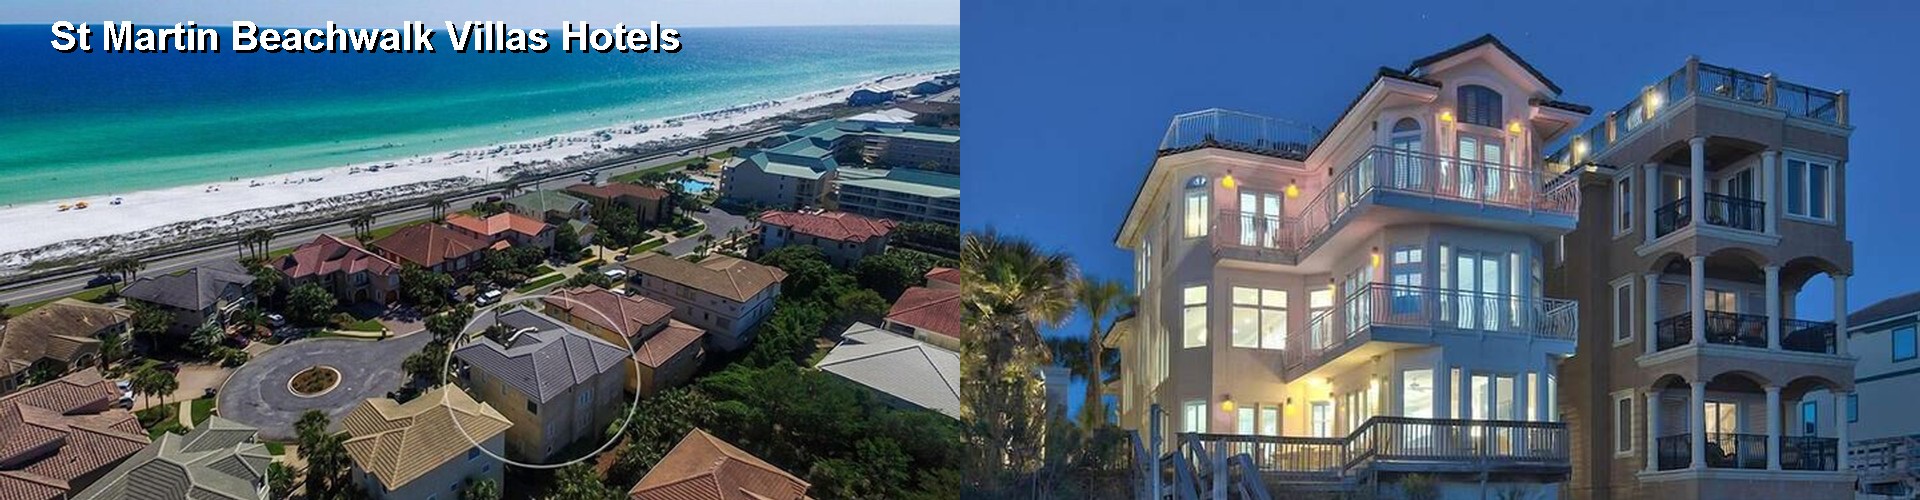 5 Best Hotels near St Martin Beachwalk Villas